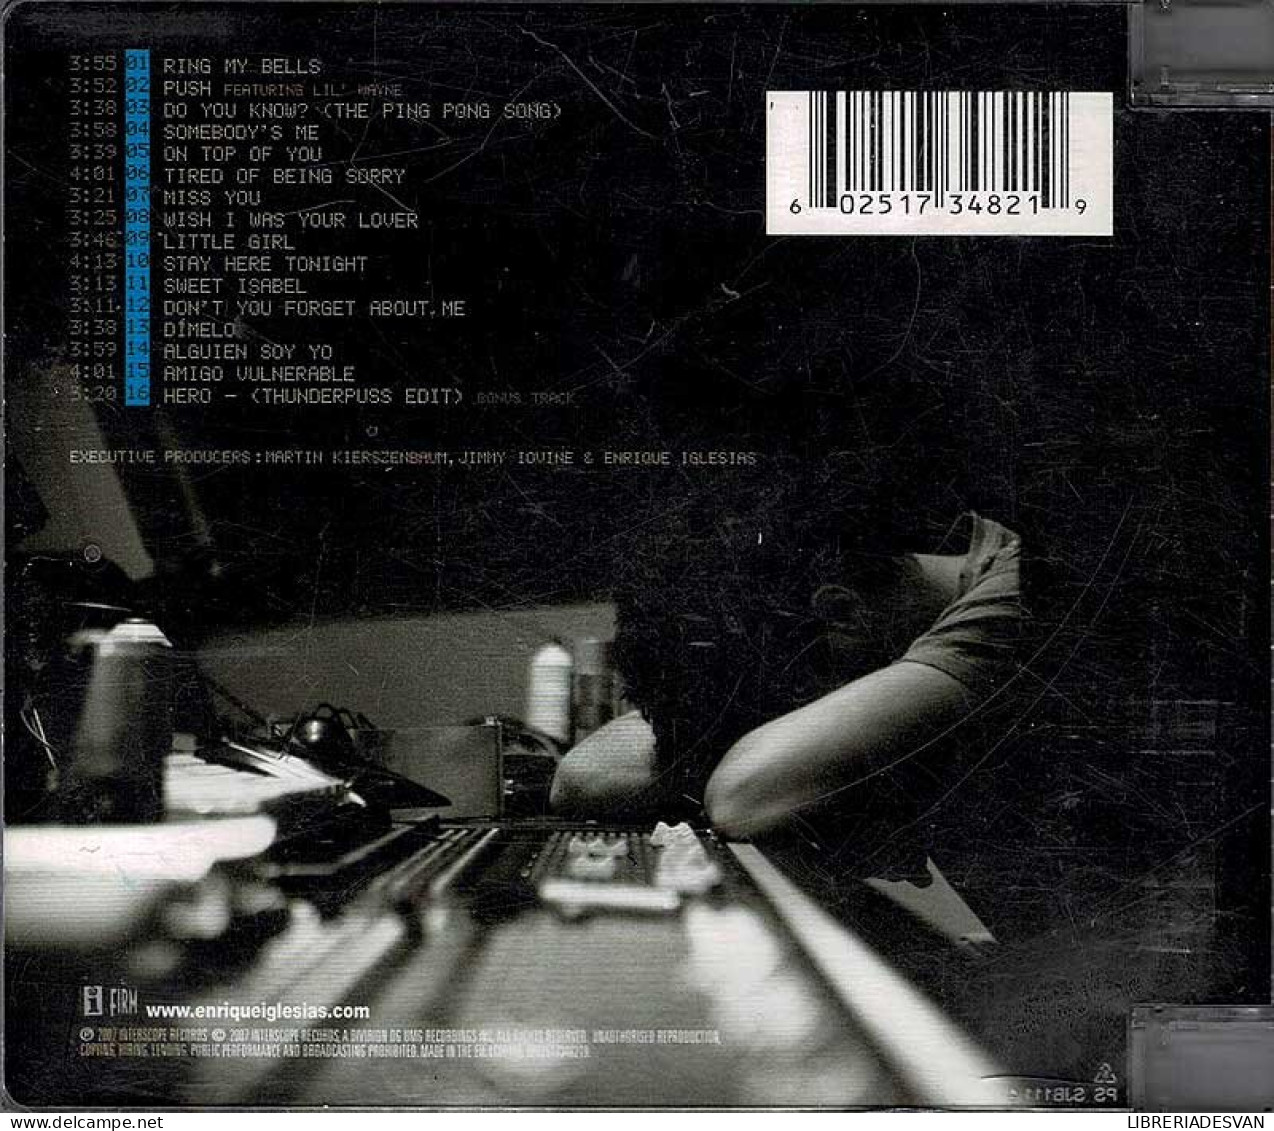 Enrique Iglesias - Insomniac. CD - Disco, Pop